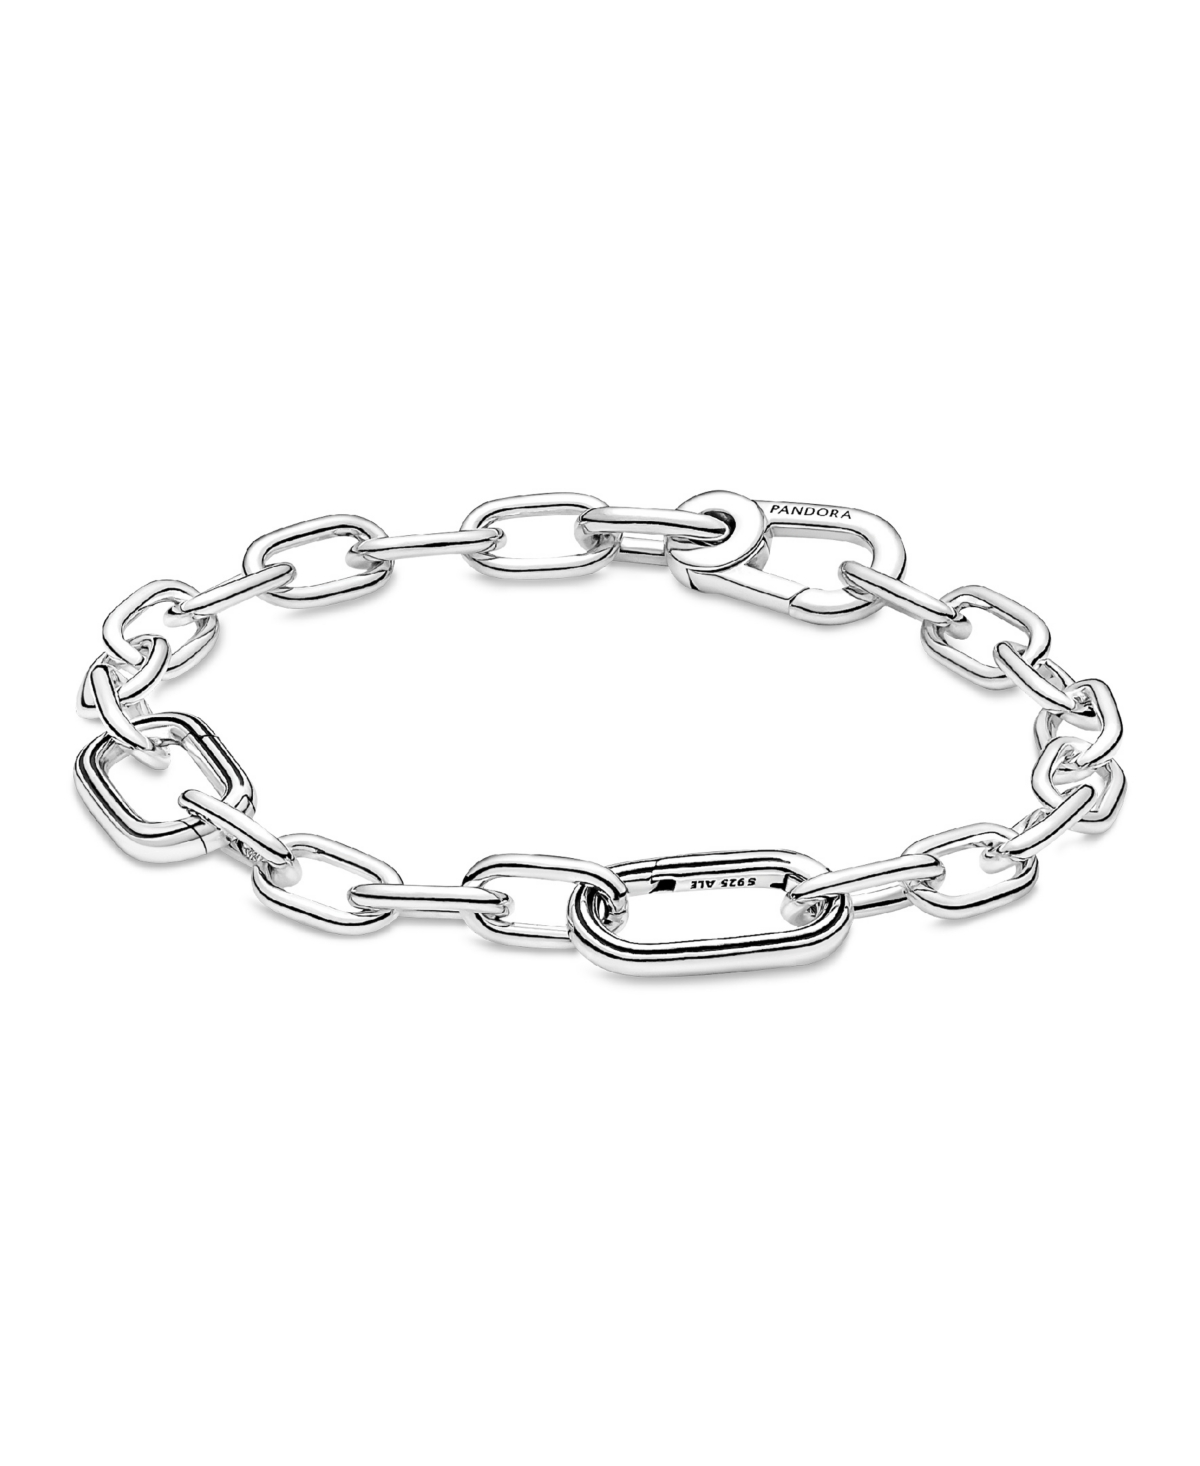 Me Sterling Silver Link Chain Bracelet - Silver